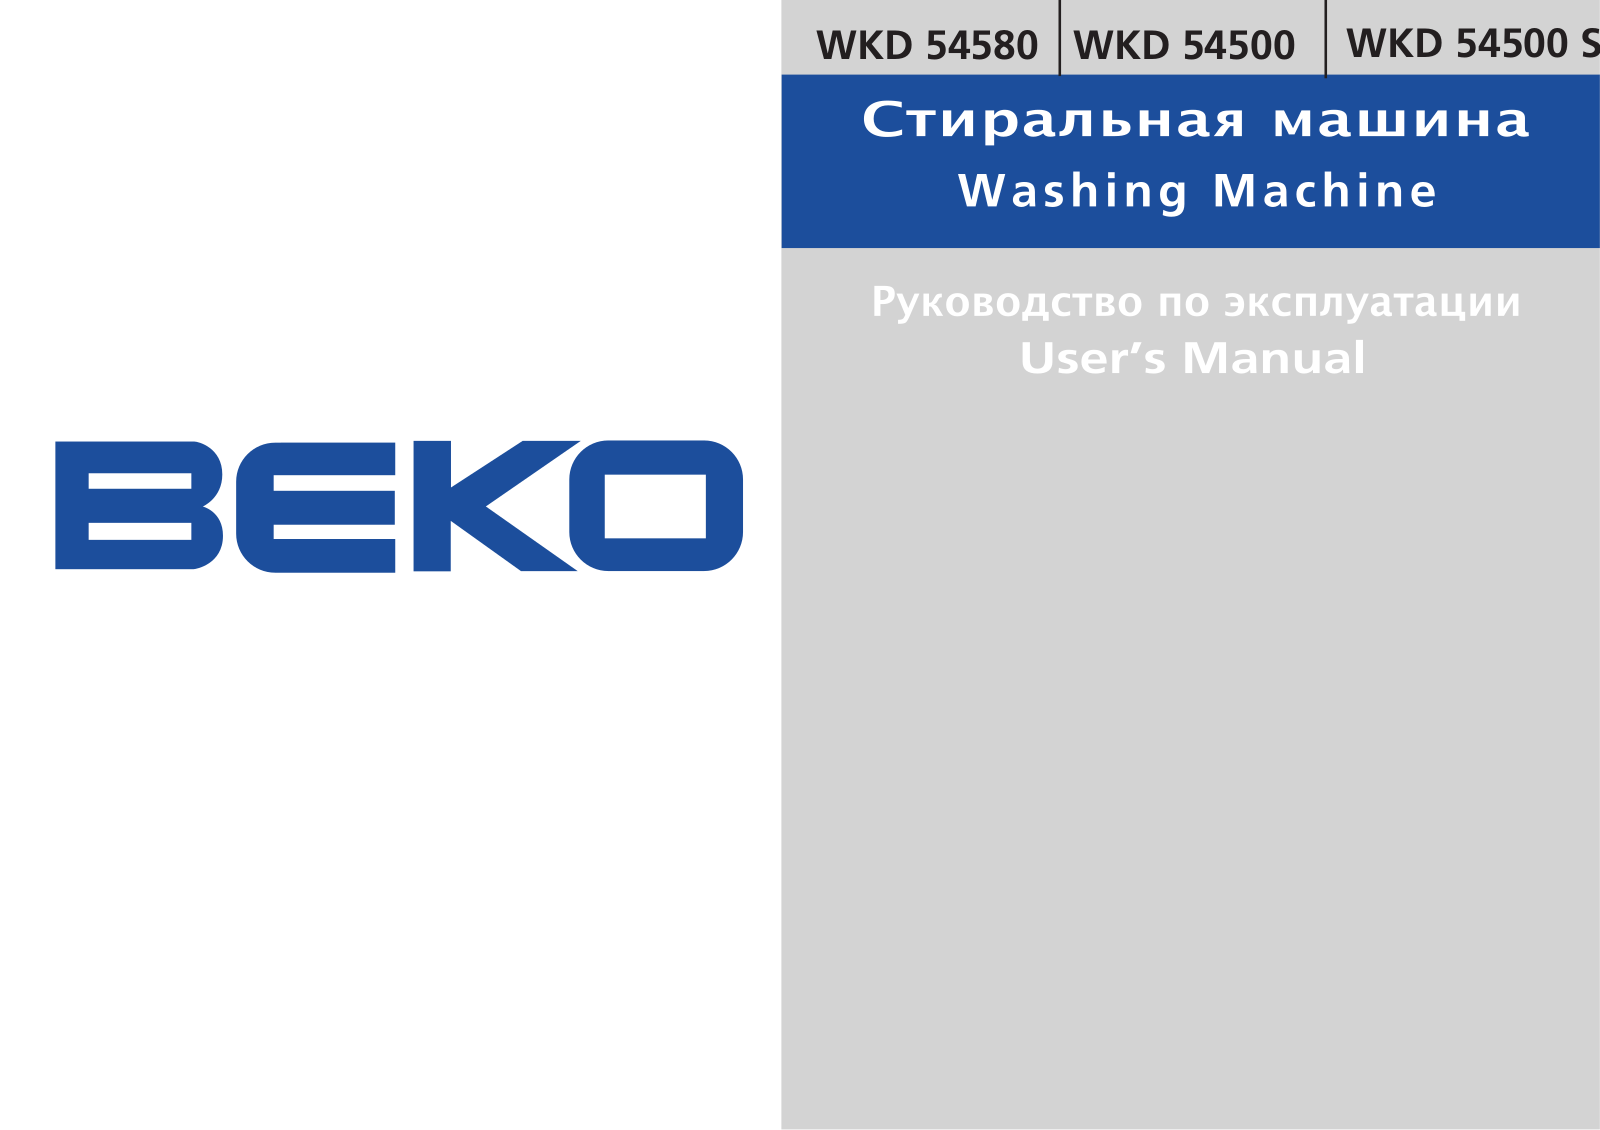 BEKO WKD 54580, WKD 54500S, WKD 54500 User Manual